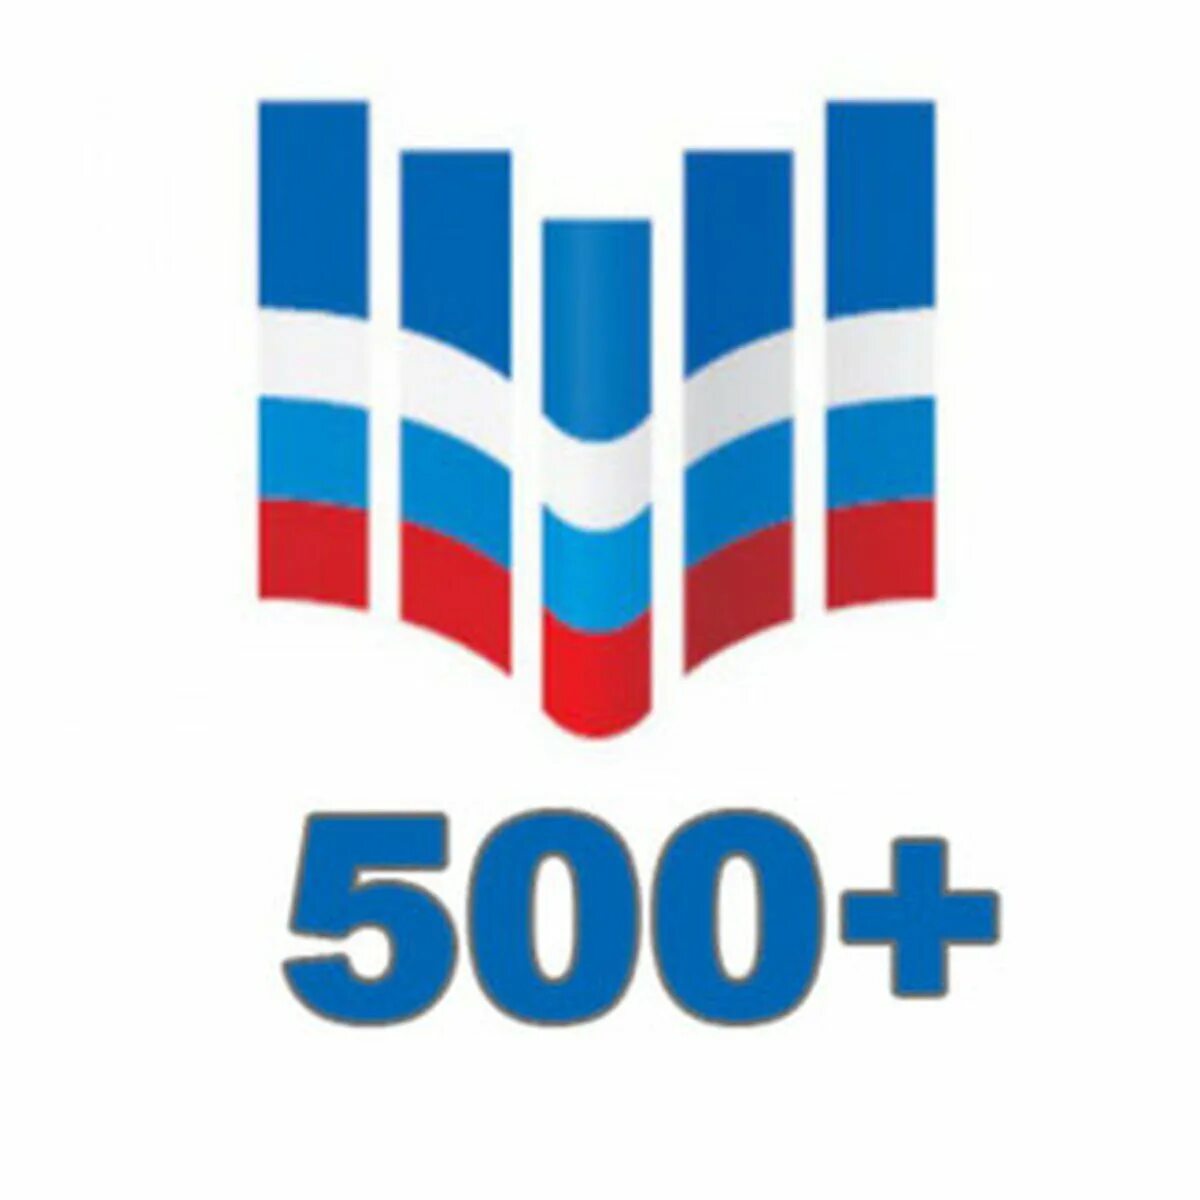 Test fioco ru. Проект 500+. Логотип 500+. Логотип 500+ образование. Эмблема проекта 500+.